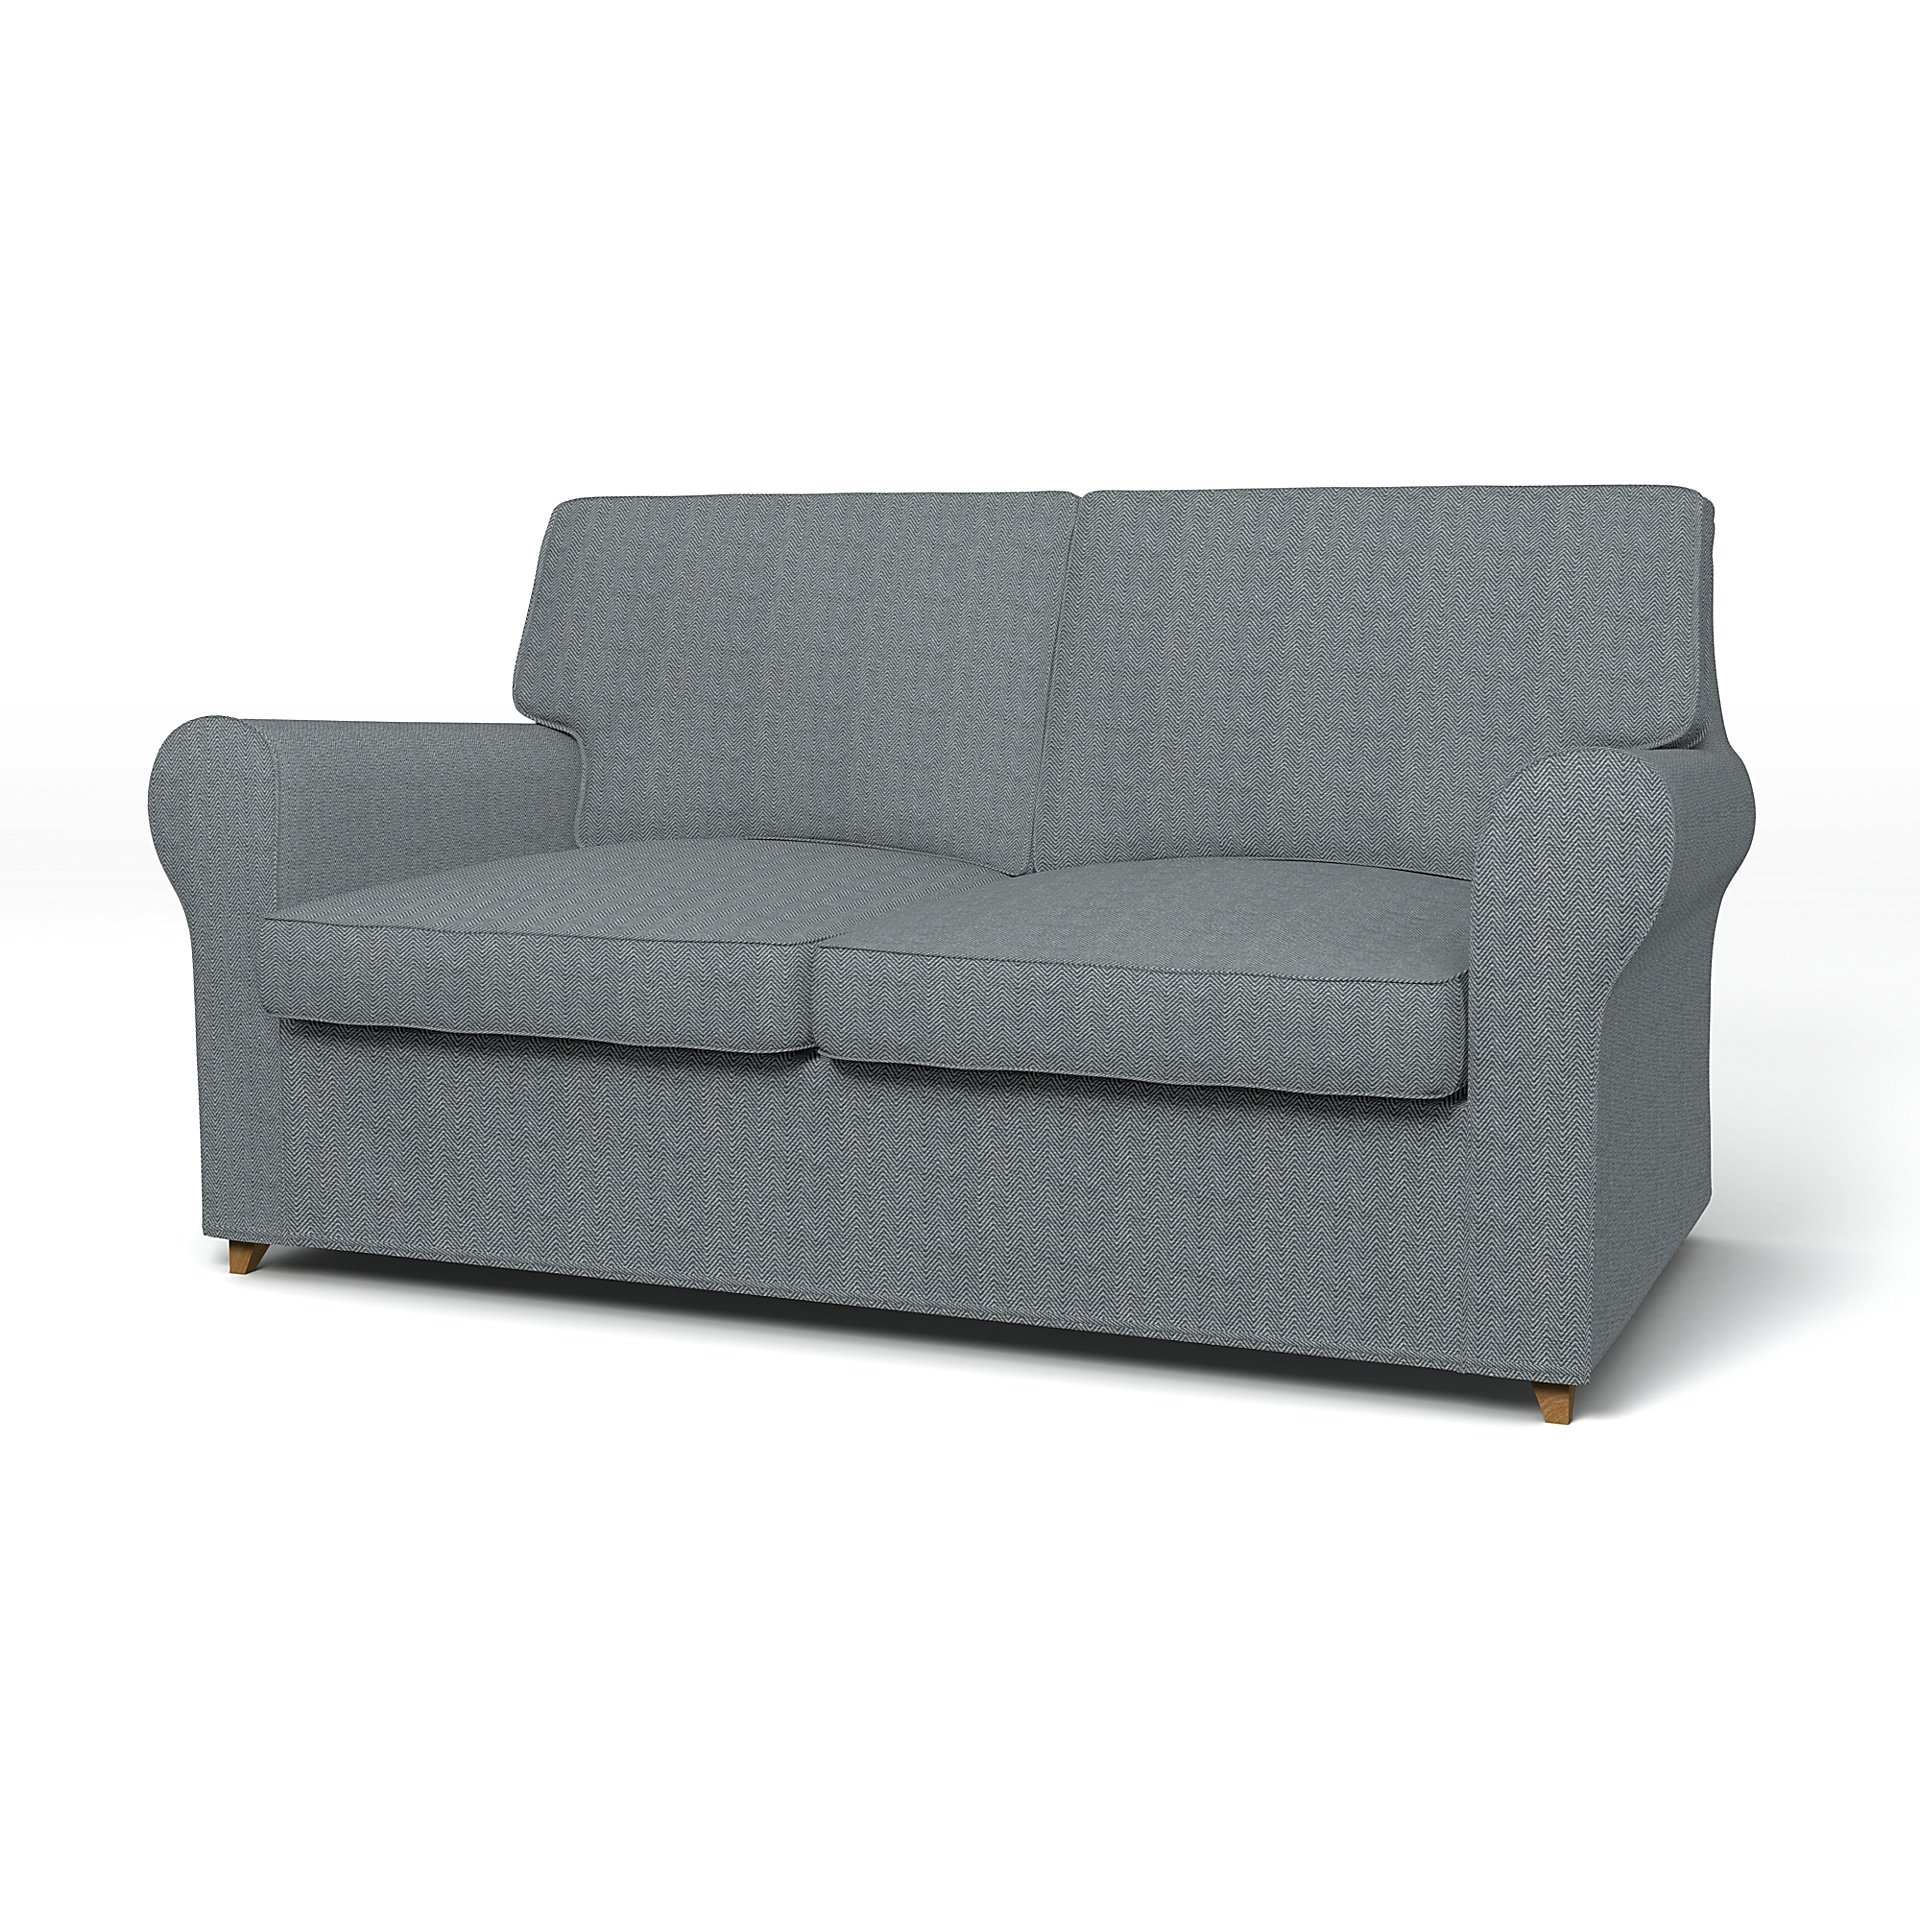 Sofa Covers For Discontinued Ikea Angby, Leather Futon Cover Ikea